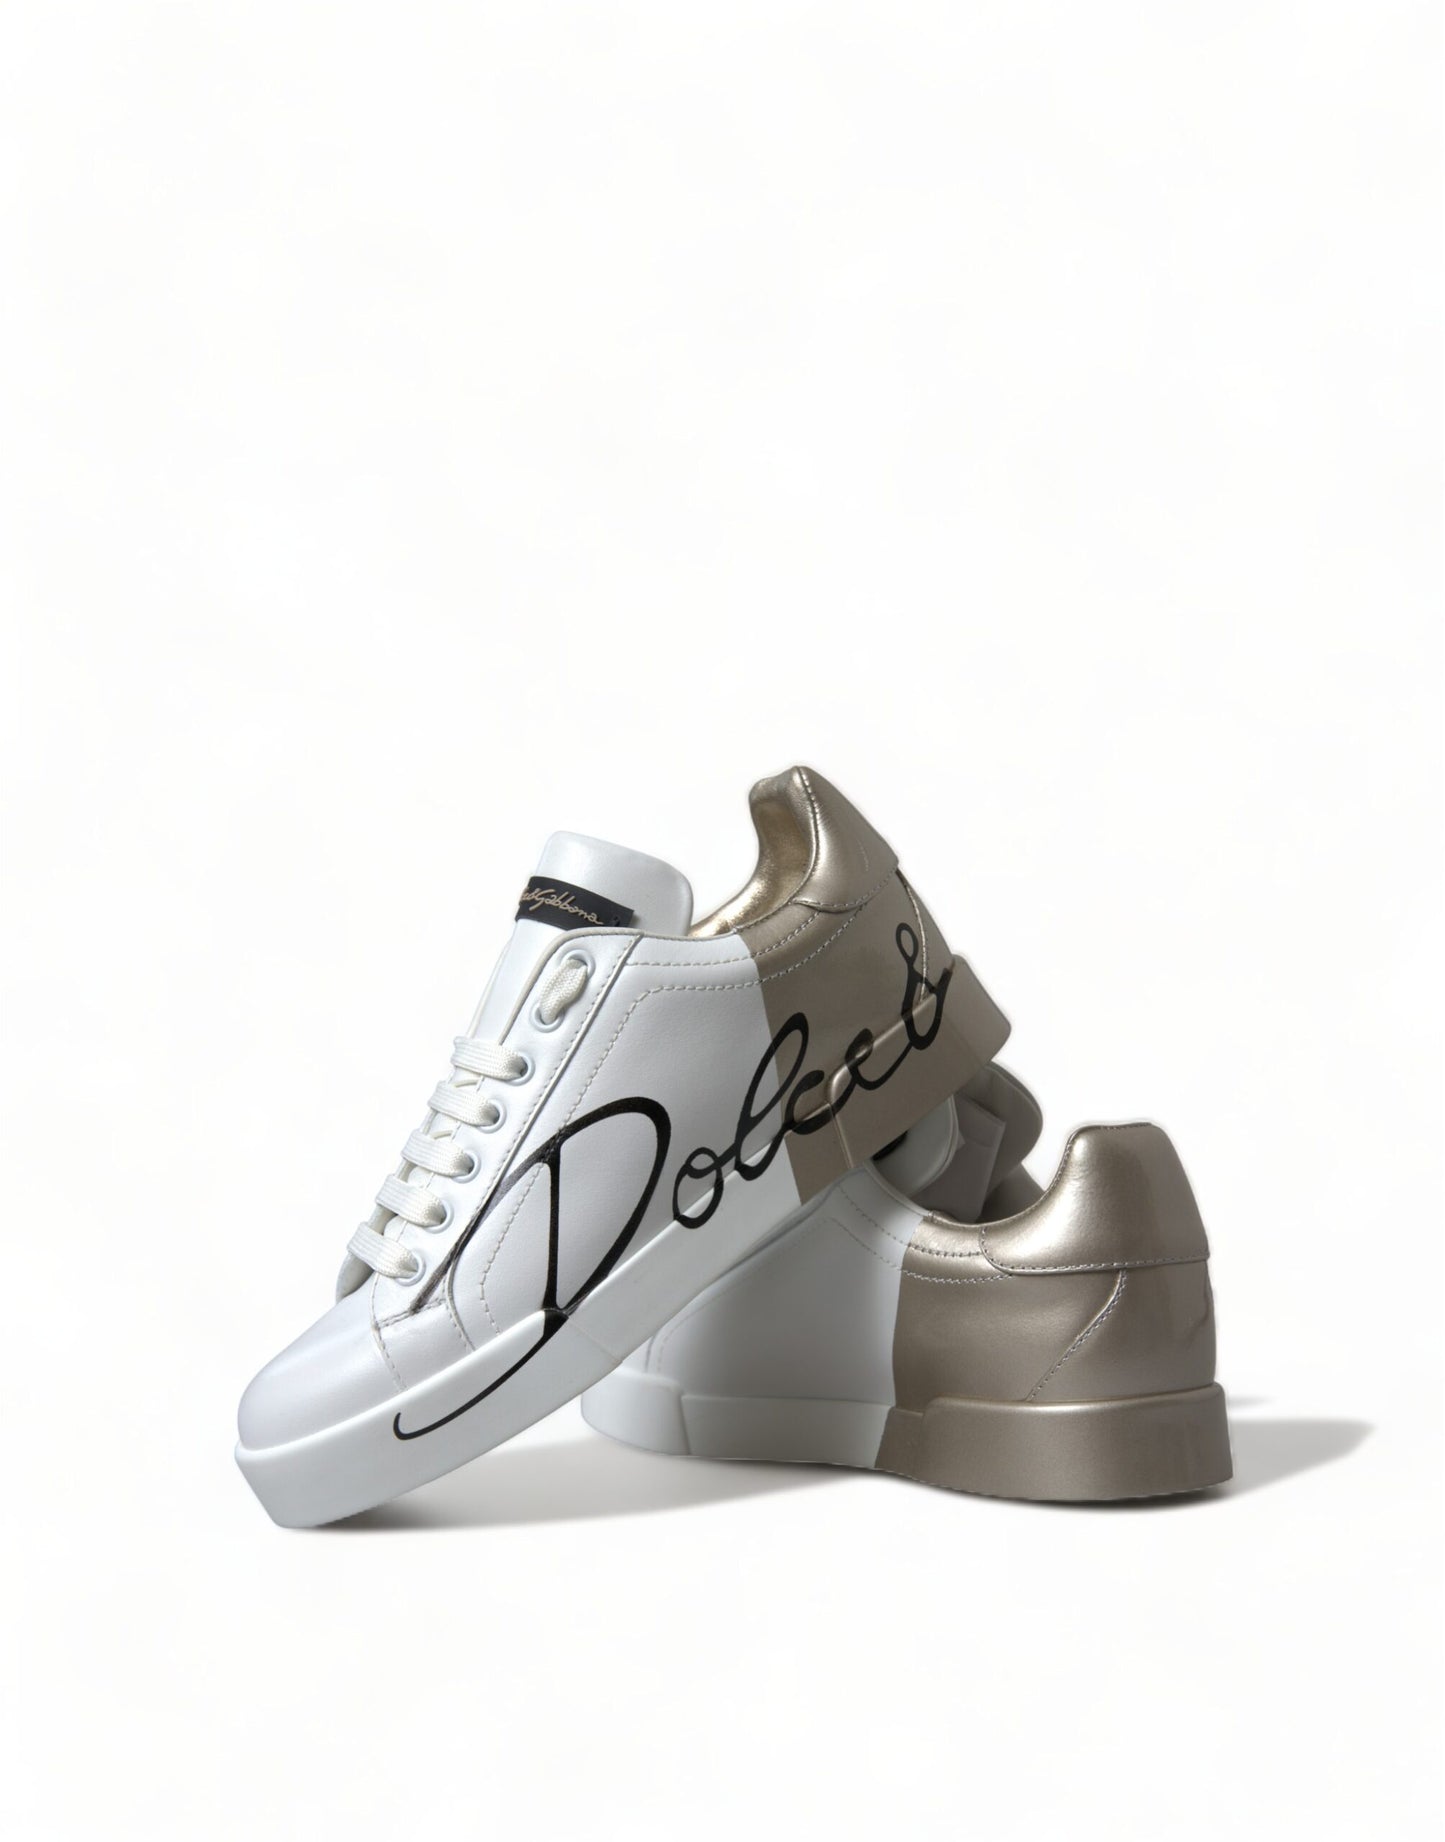 Dolce & Gabbana Elegant White & Gold Leather Sneakers